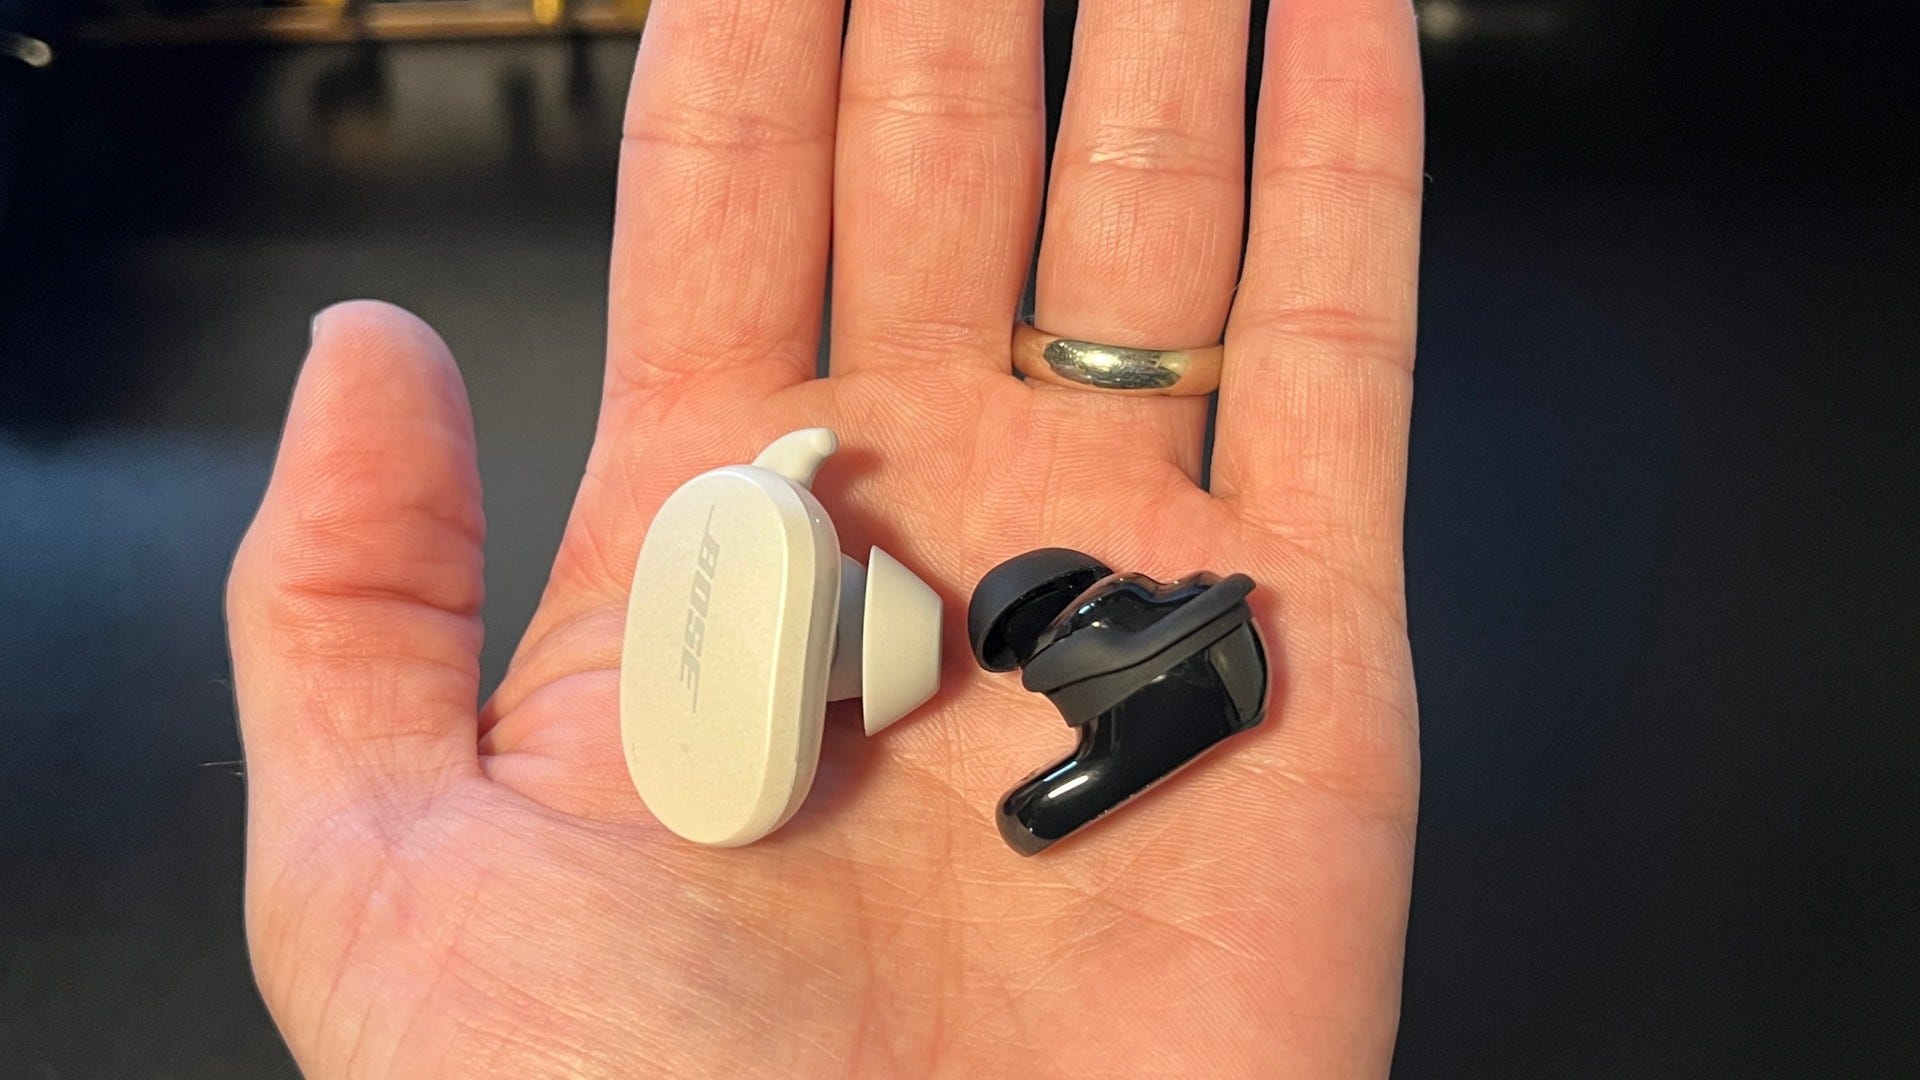 Bose QuietComfort 2 earbuds and original QuietComfort earbuds in hand for size comparison